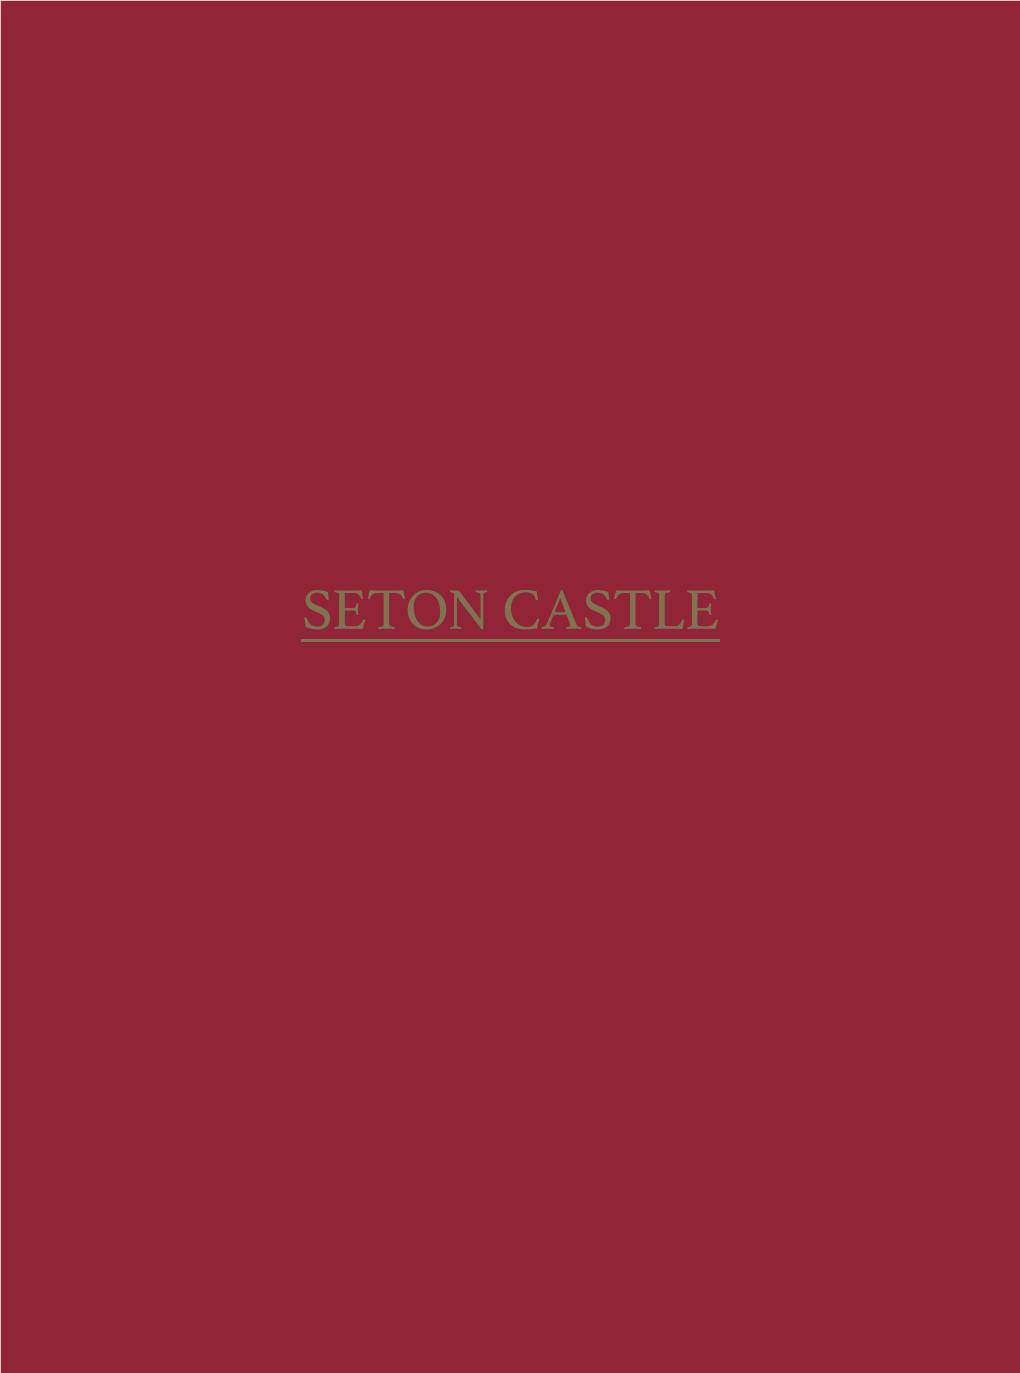 Seton Castle Seton Castle Longniddry, East Lothian Eh32 0Pg